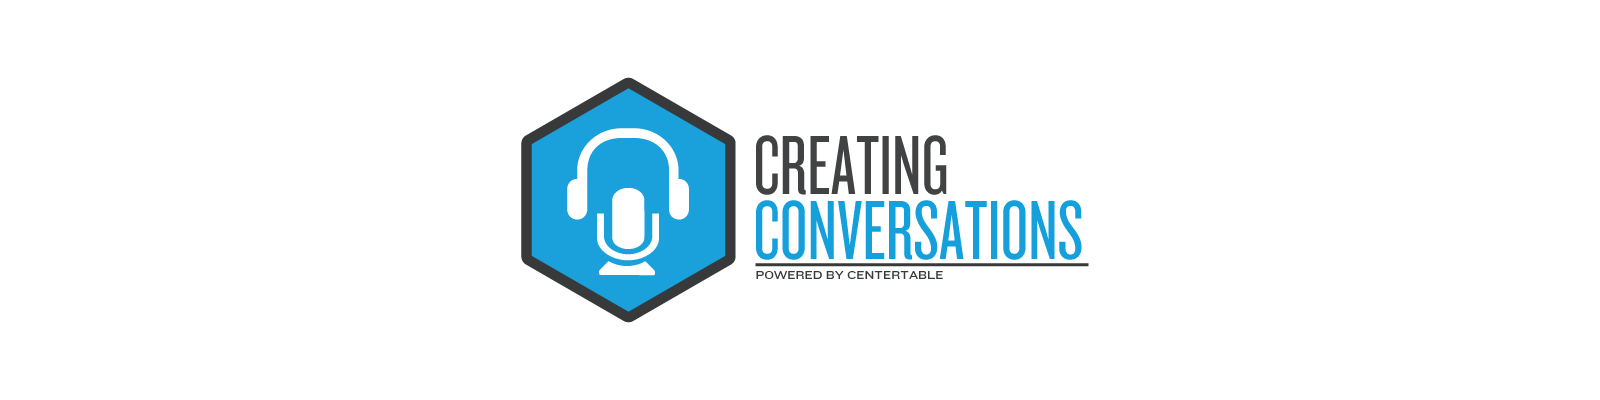 Creating Conversations